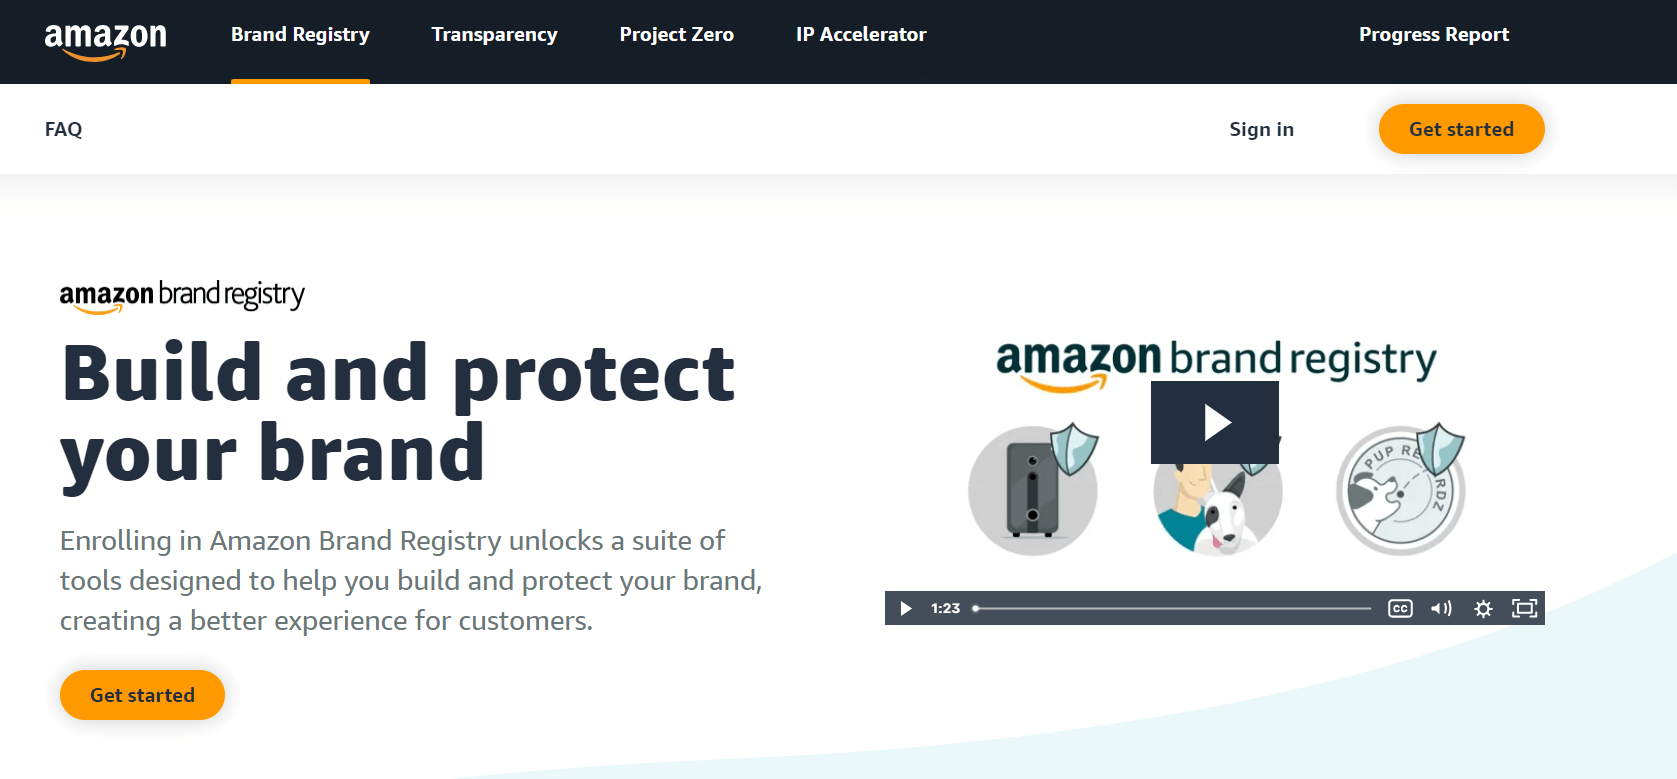 Amazon Brand Registry program